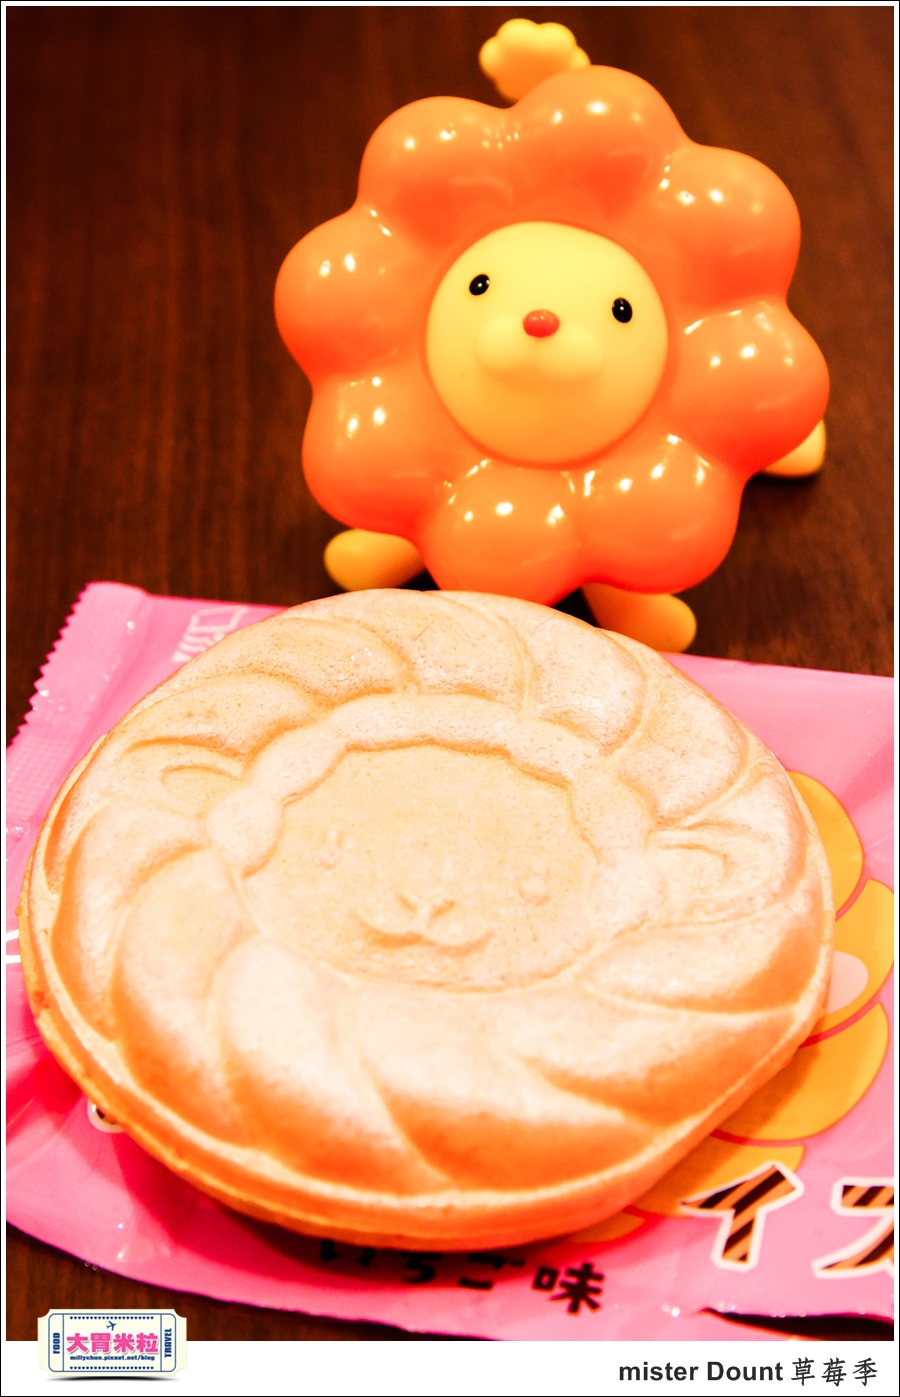 mister Dounth草莓季甜甜圈推薦@大胃米粒0018.jpg